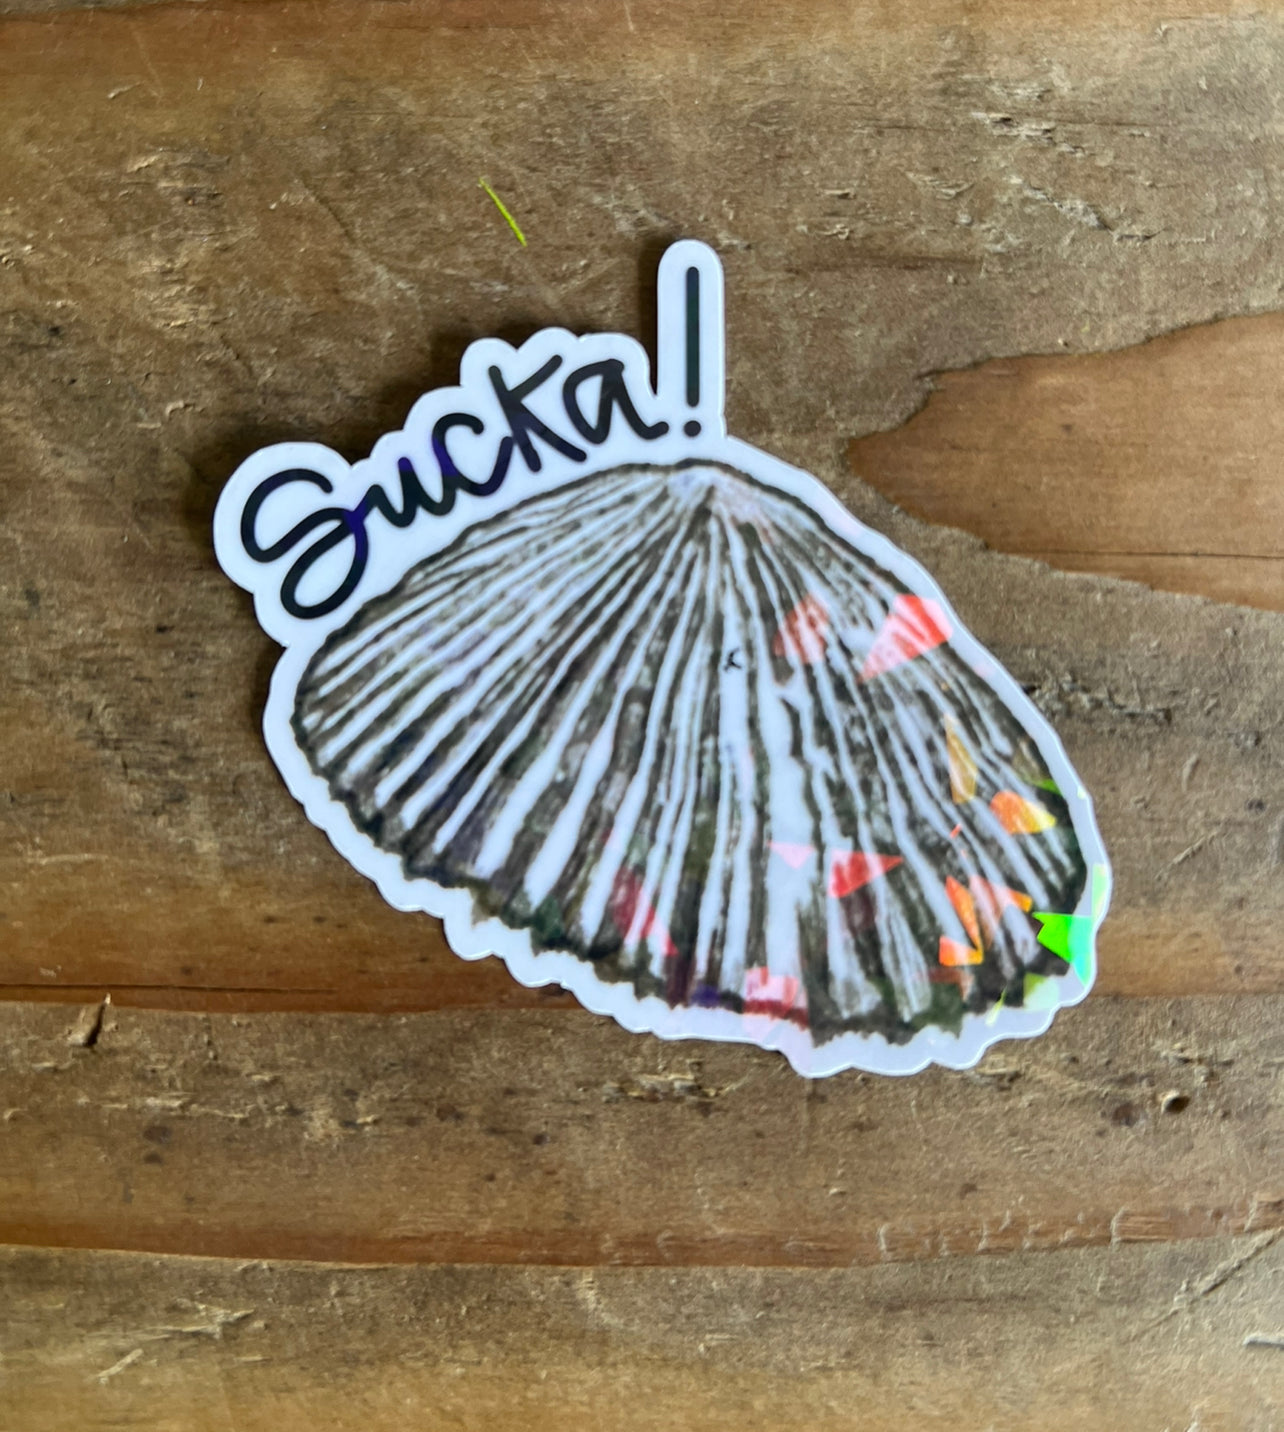 Sucka! Sticker with holographic overlay